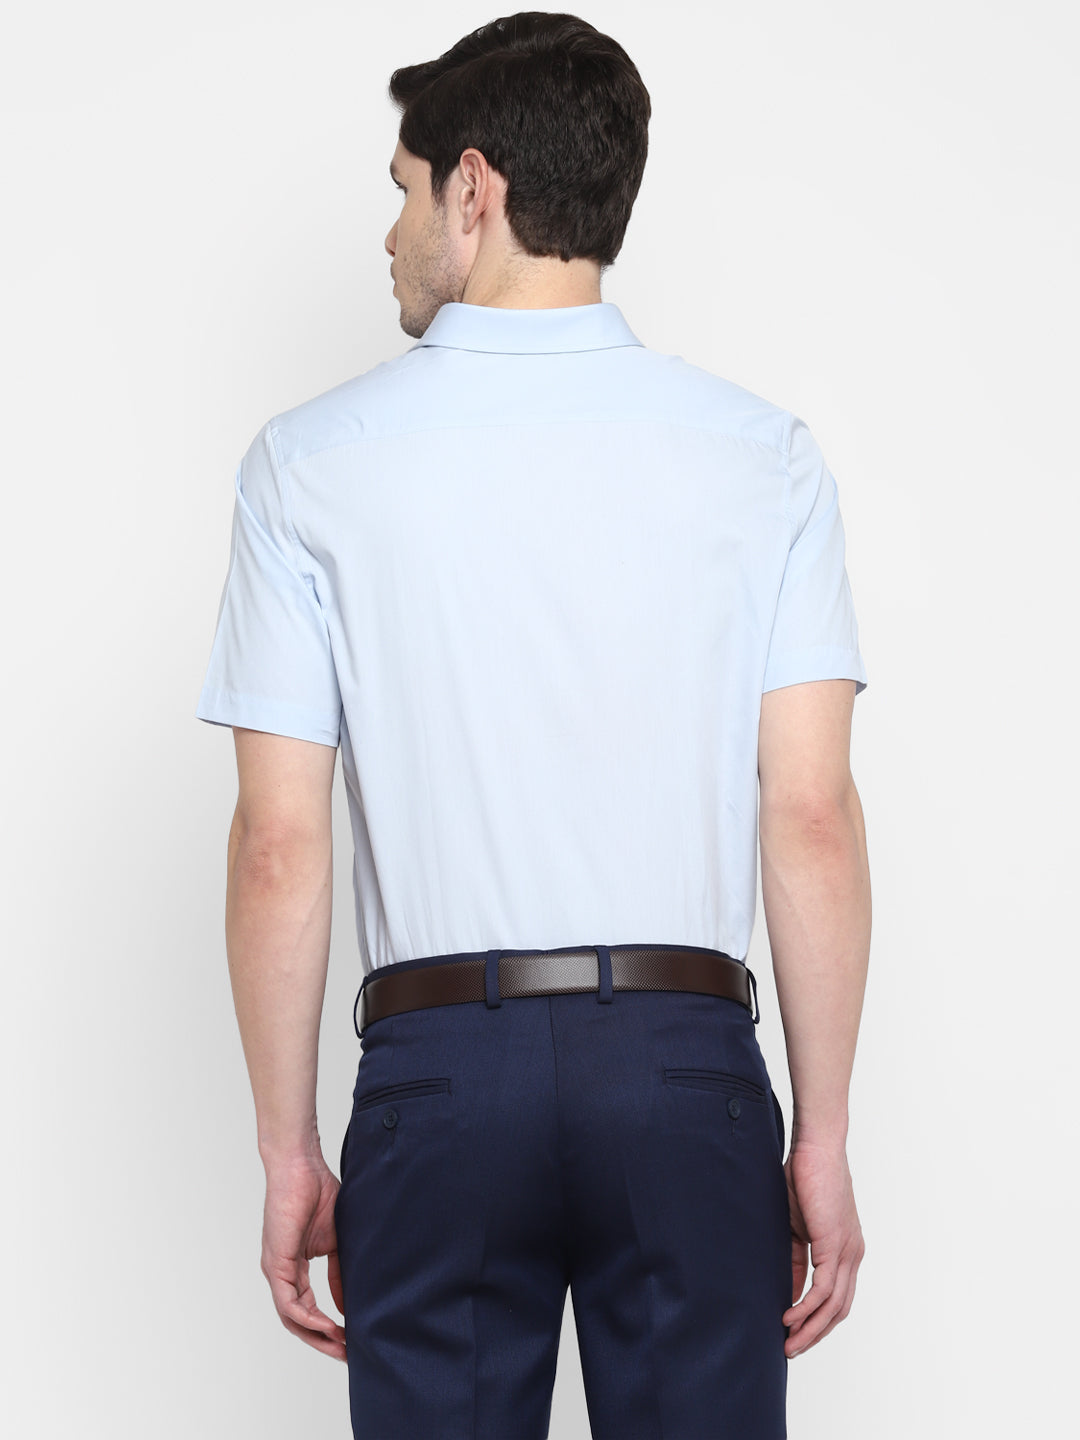 Solid Blue Regular Fit Casual Shirt